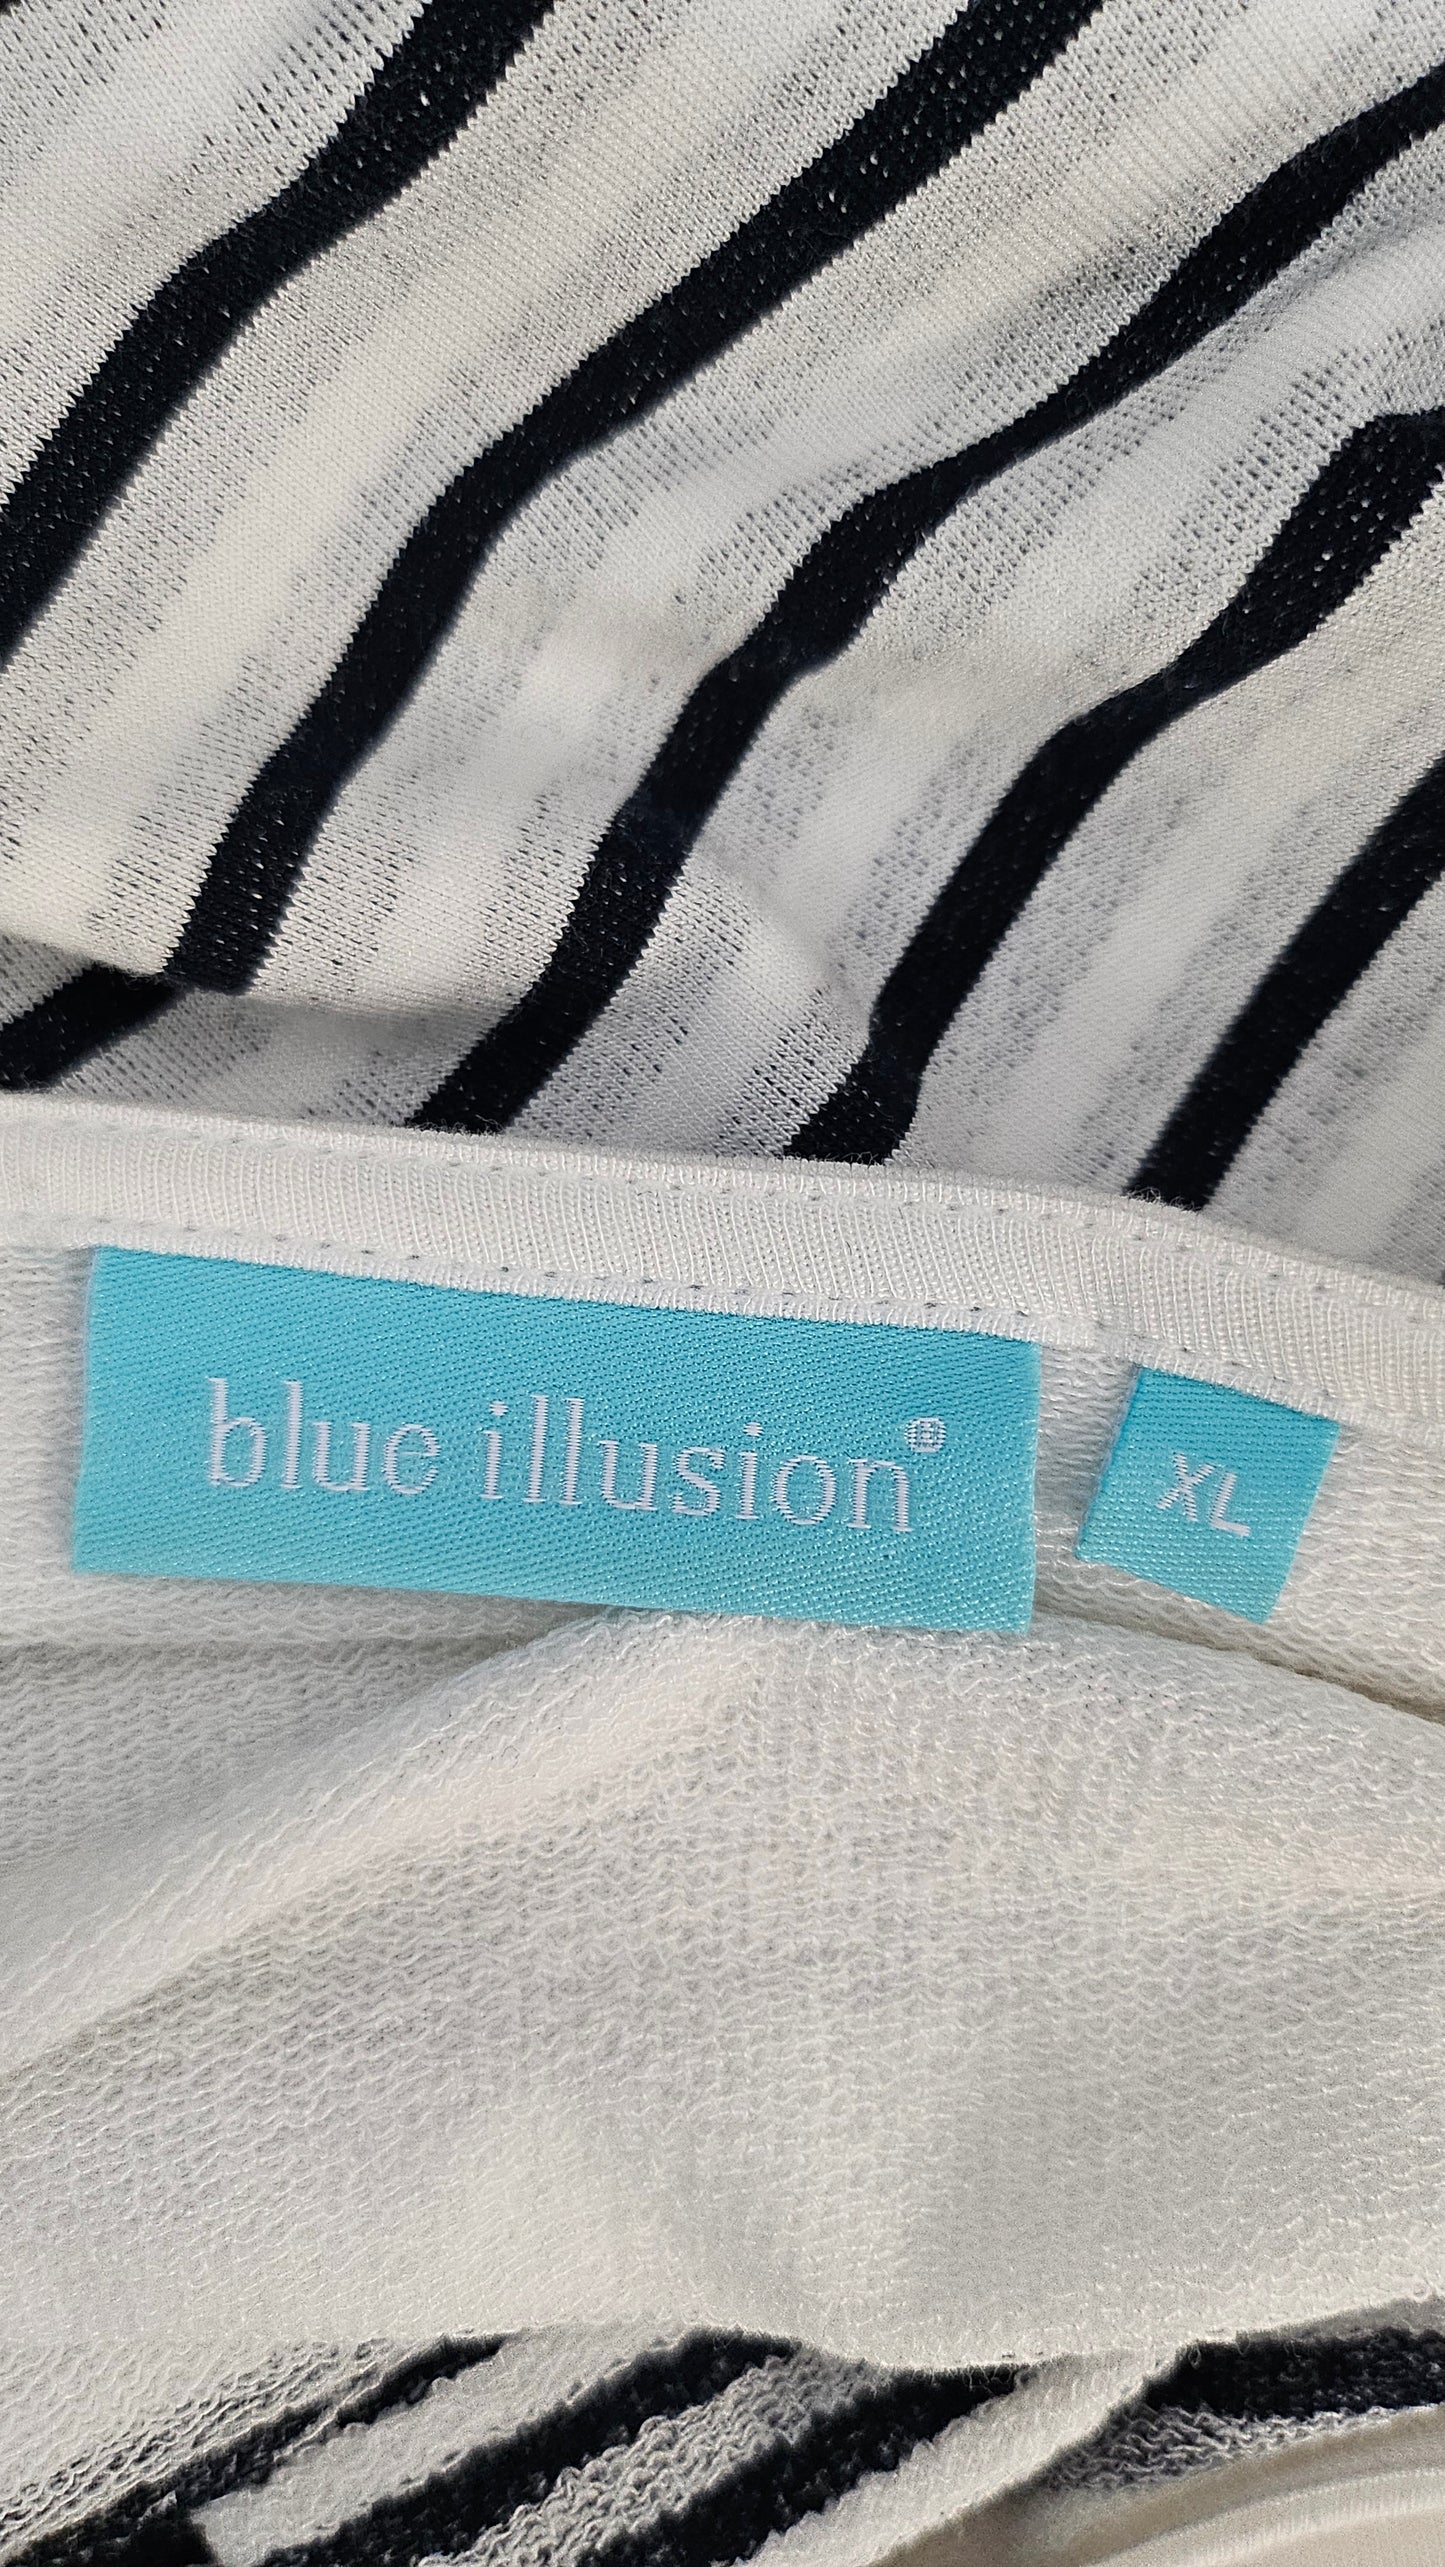 Blue Illusion  Stripe Top (16)